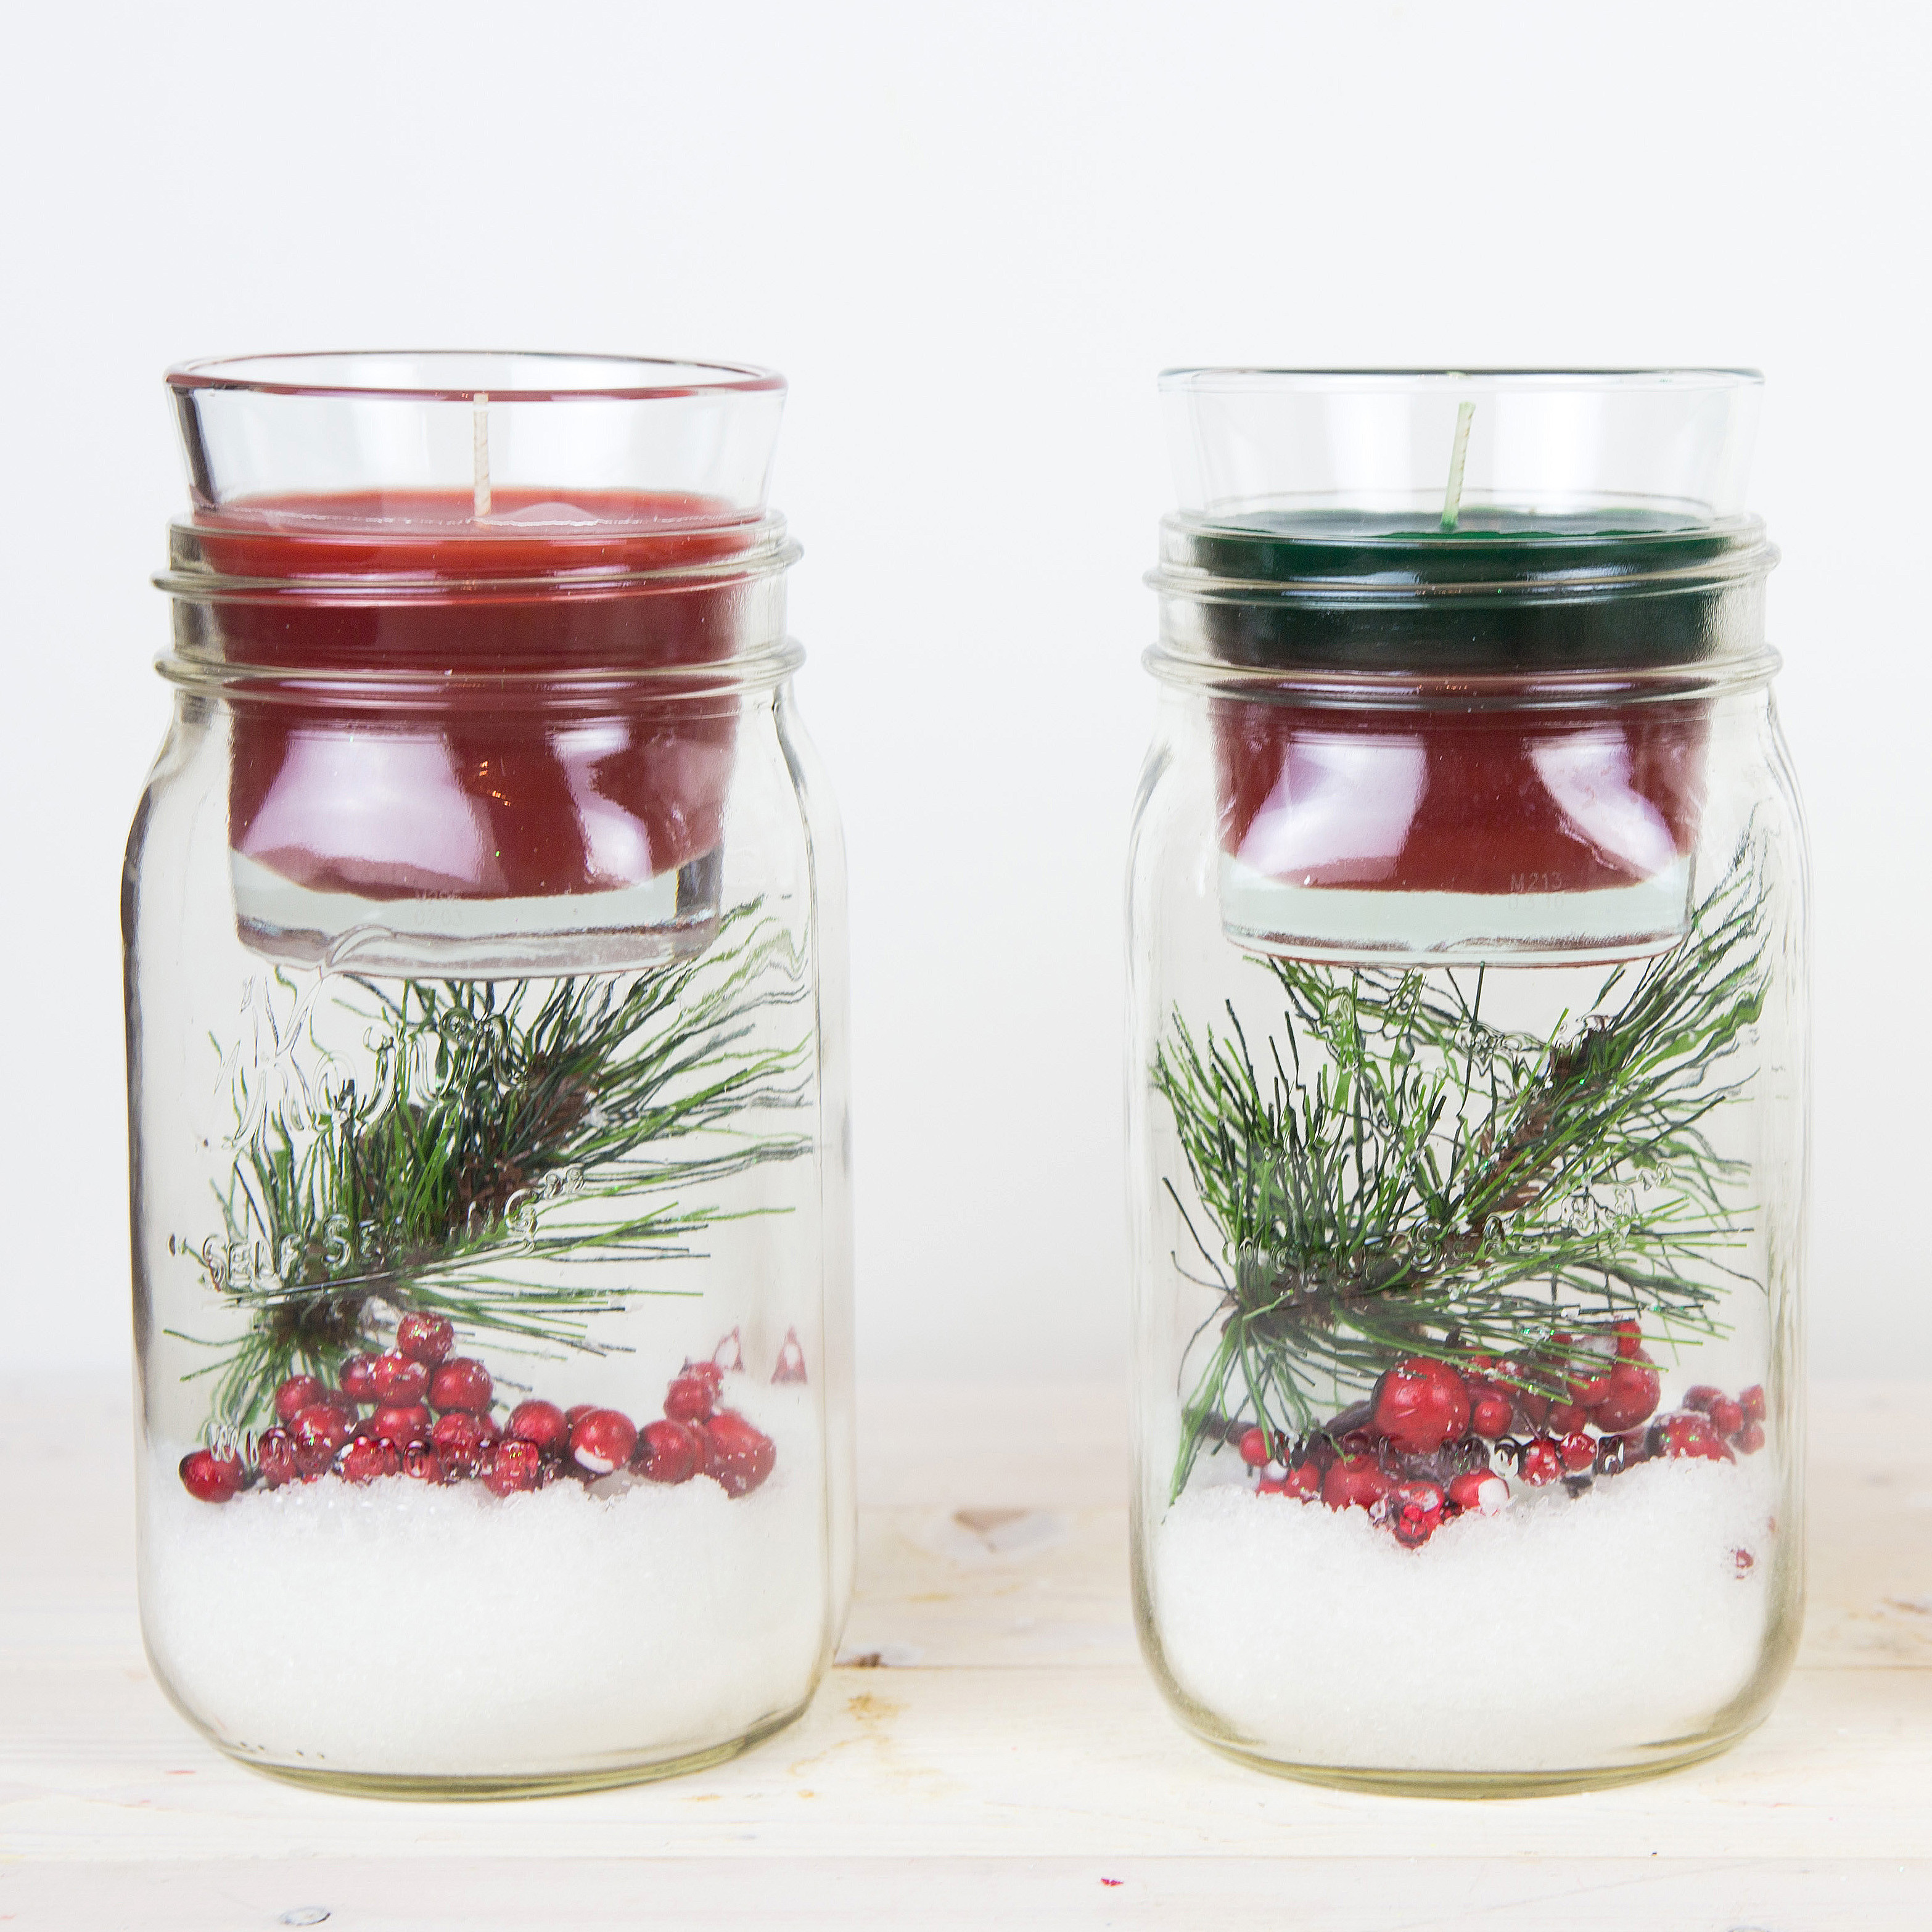 Best ideas about DIY Mason Jar Candle
. Save or Pin DIY Christmas Mason Jar Candle Holder Now.